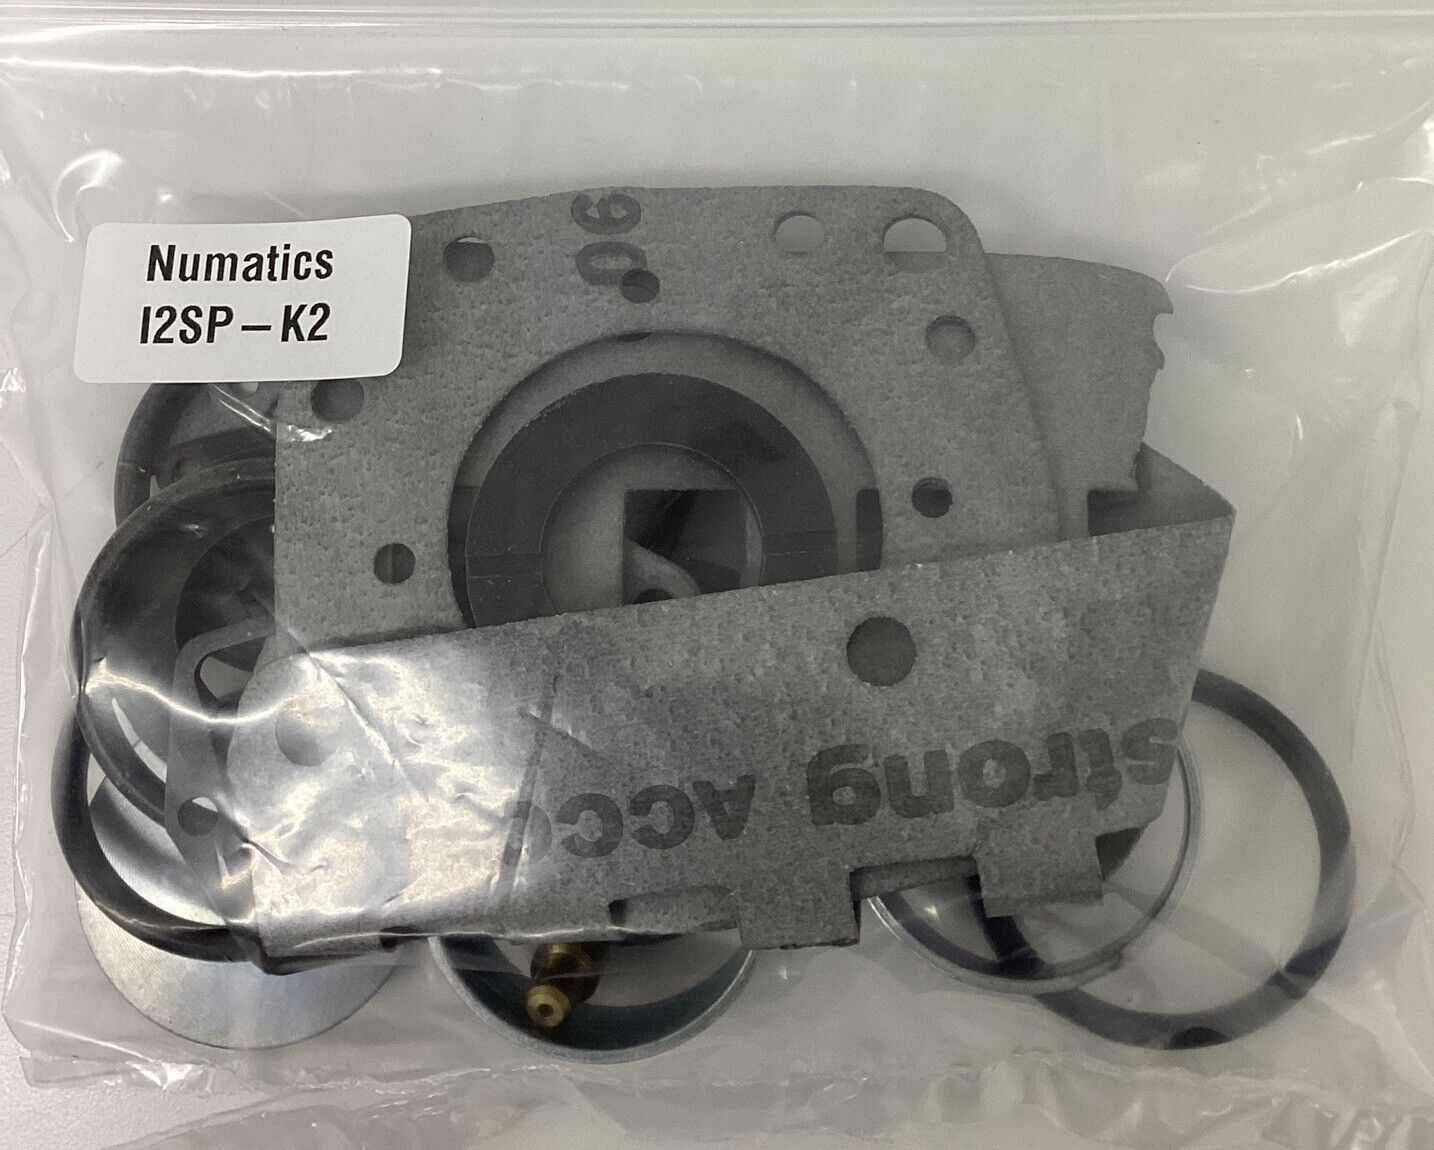 Numatic Asco I2SP-K2 Repair Kit (GR191)